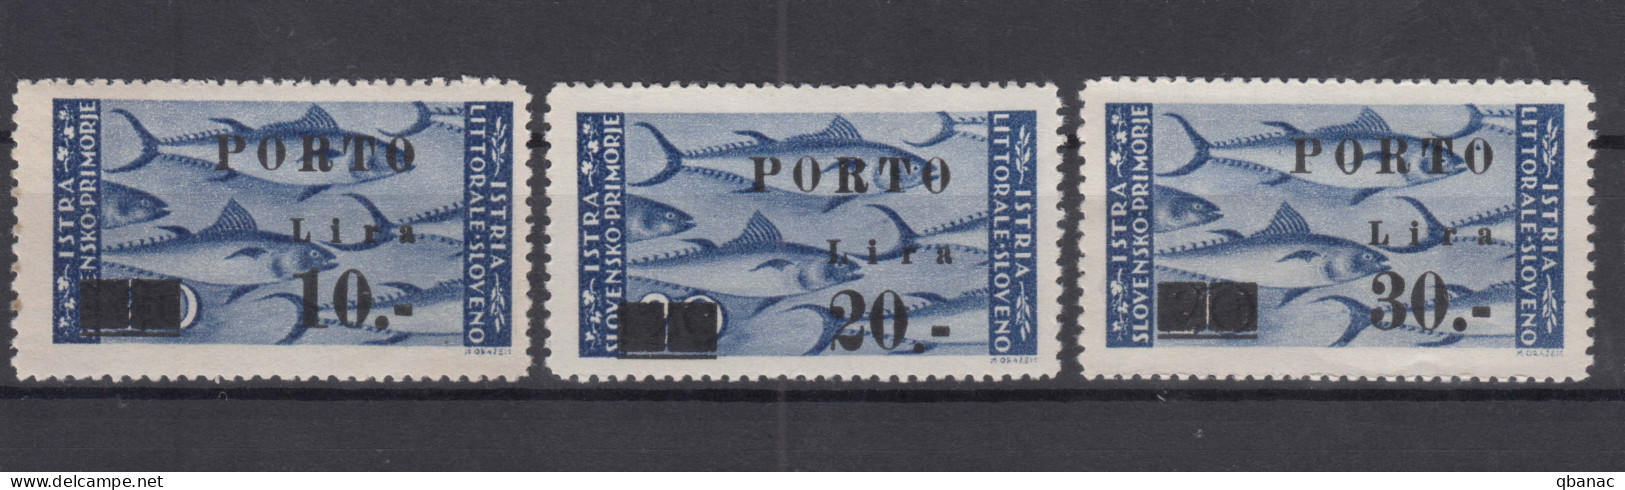 Istria Litorale Yugoslavia Occupation, Porto 1946 Sassone#17-19 Overprint II, Mint Never Hinged - Jugoslawische Bes.: Istrien